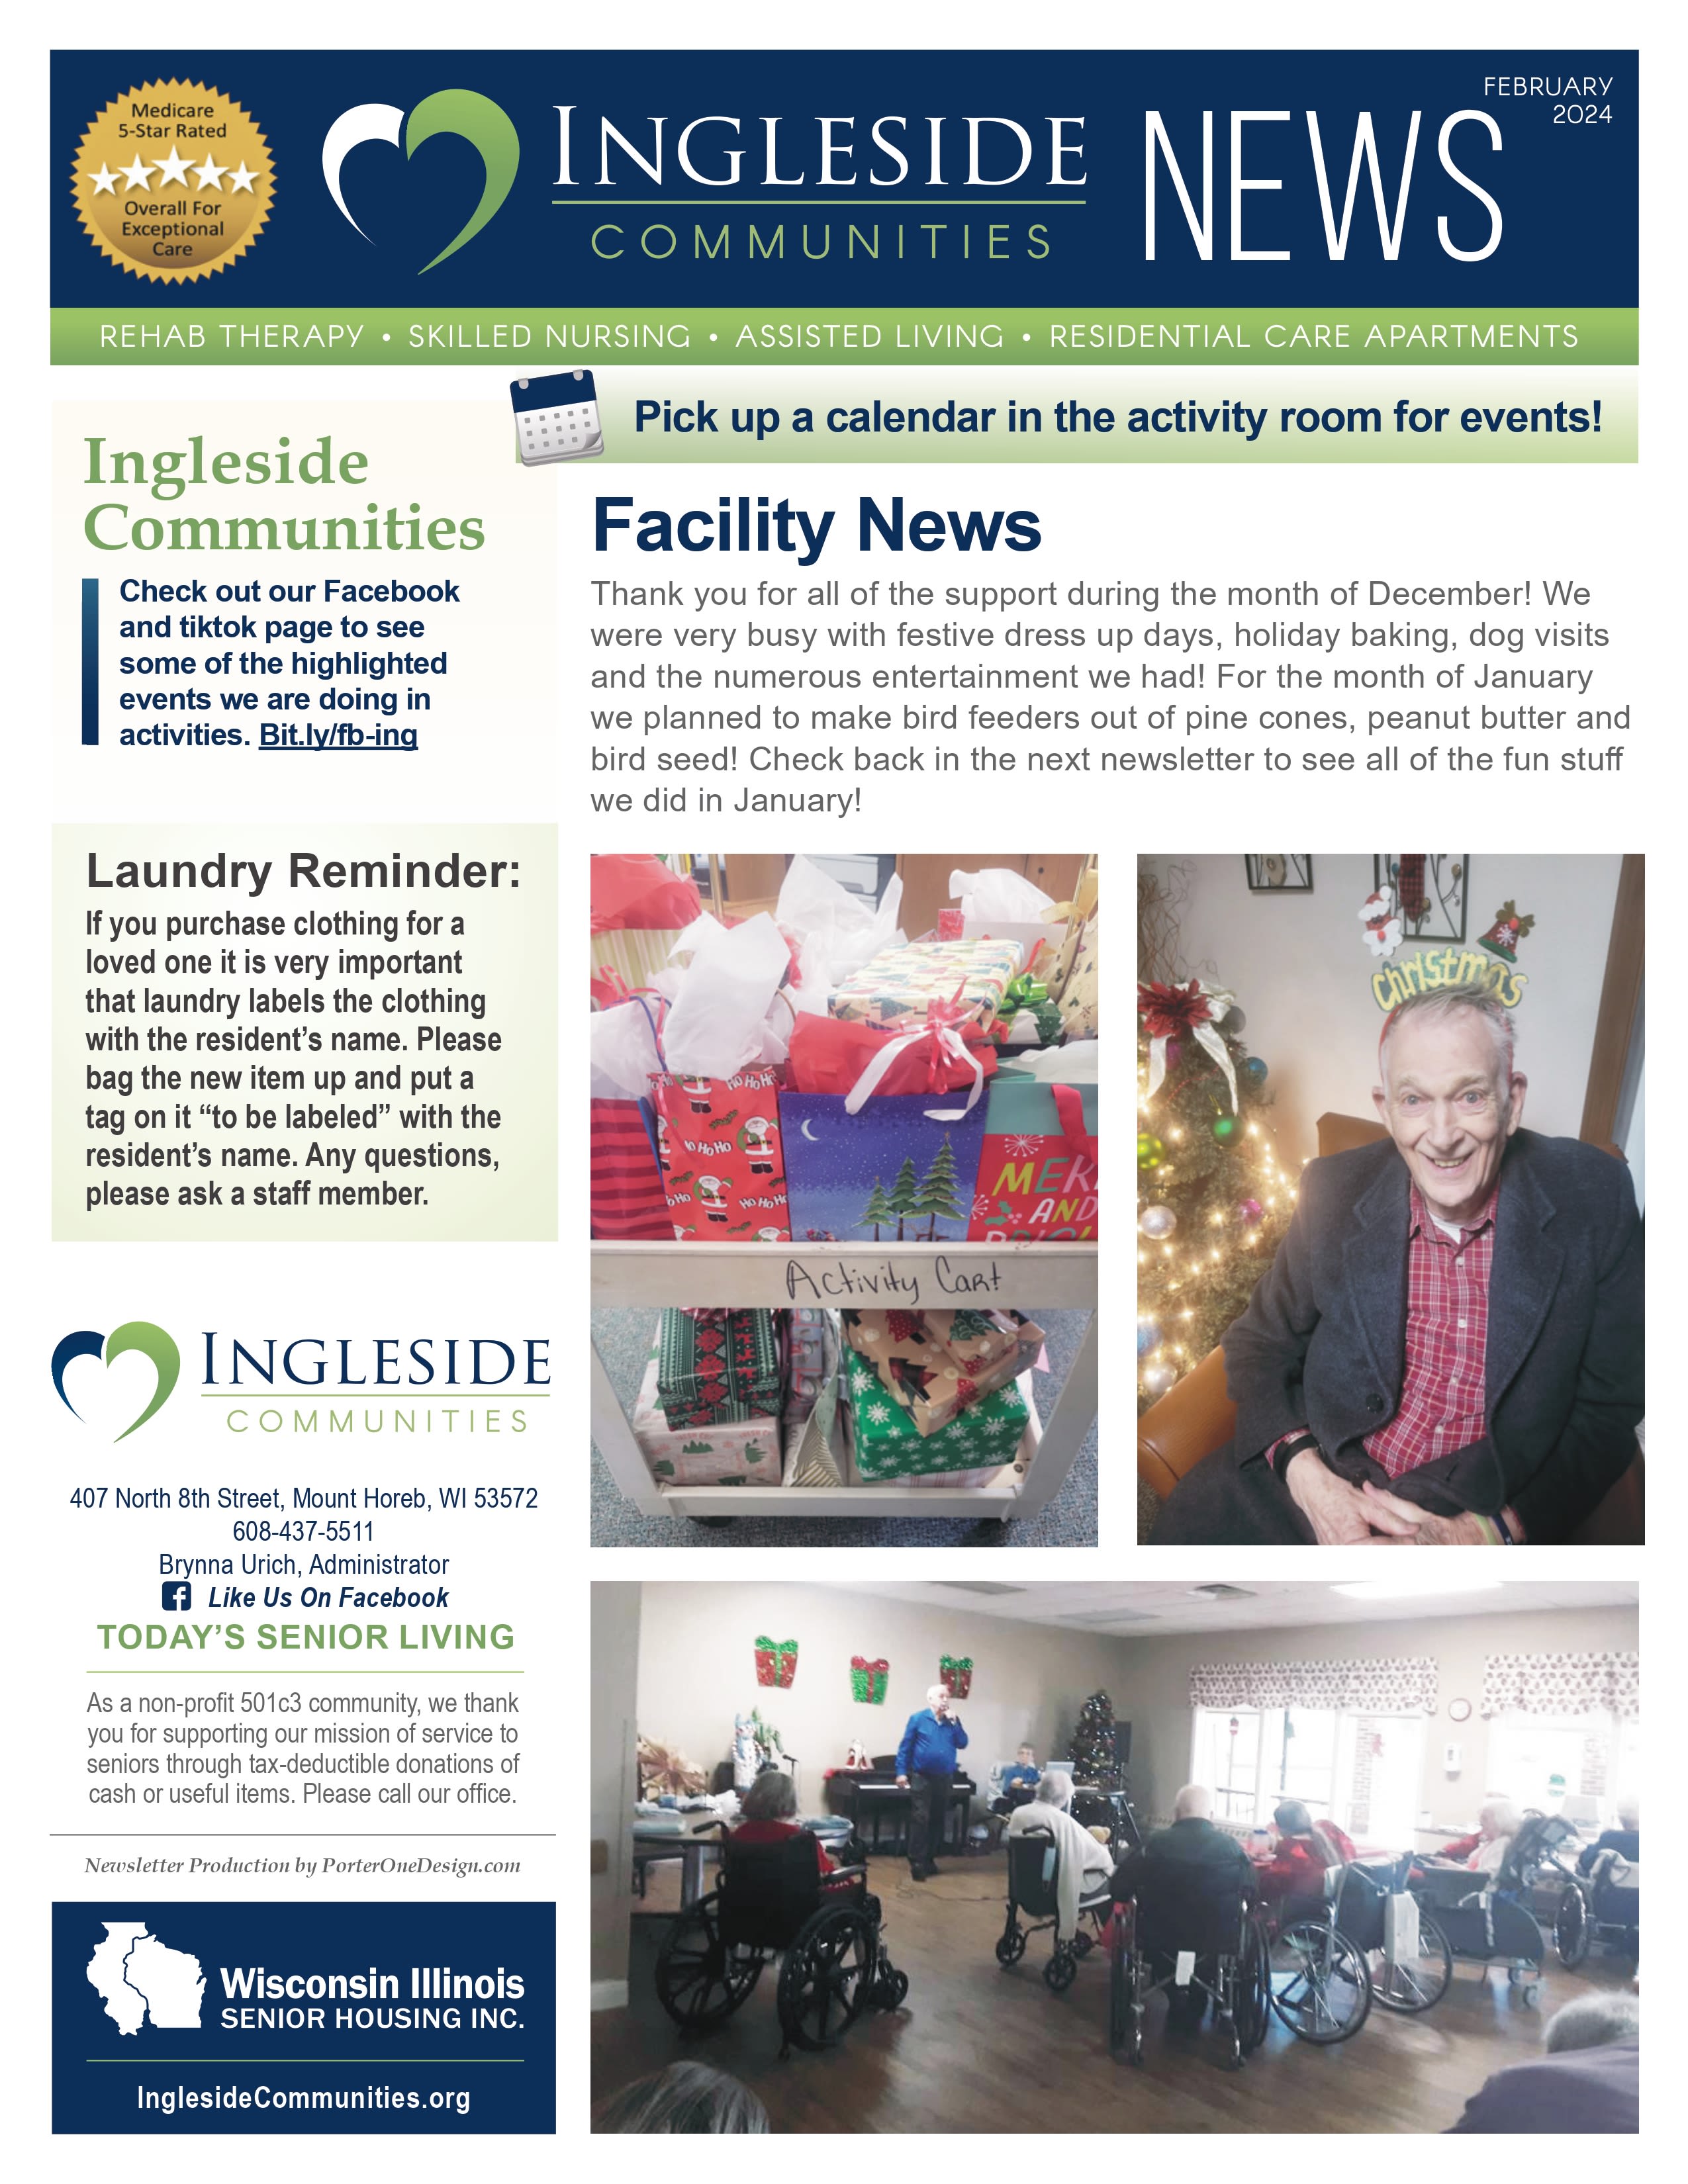 February 2024 Newsletter at Ingleside Communities in Mount Horeb, Wisconsin